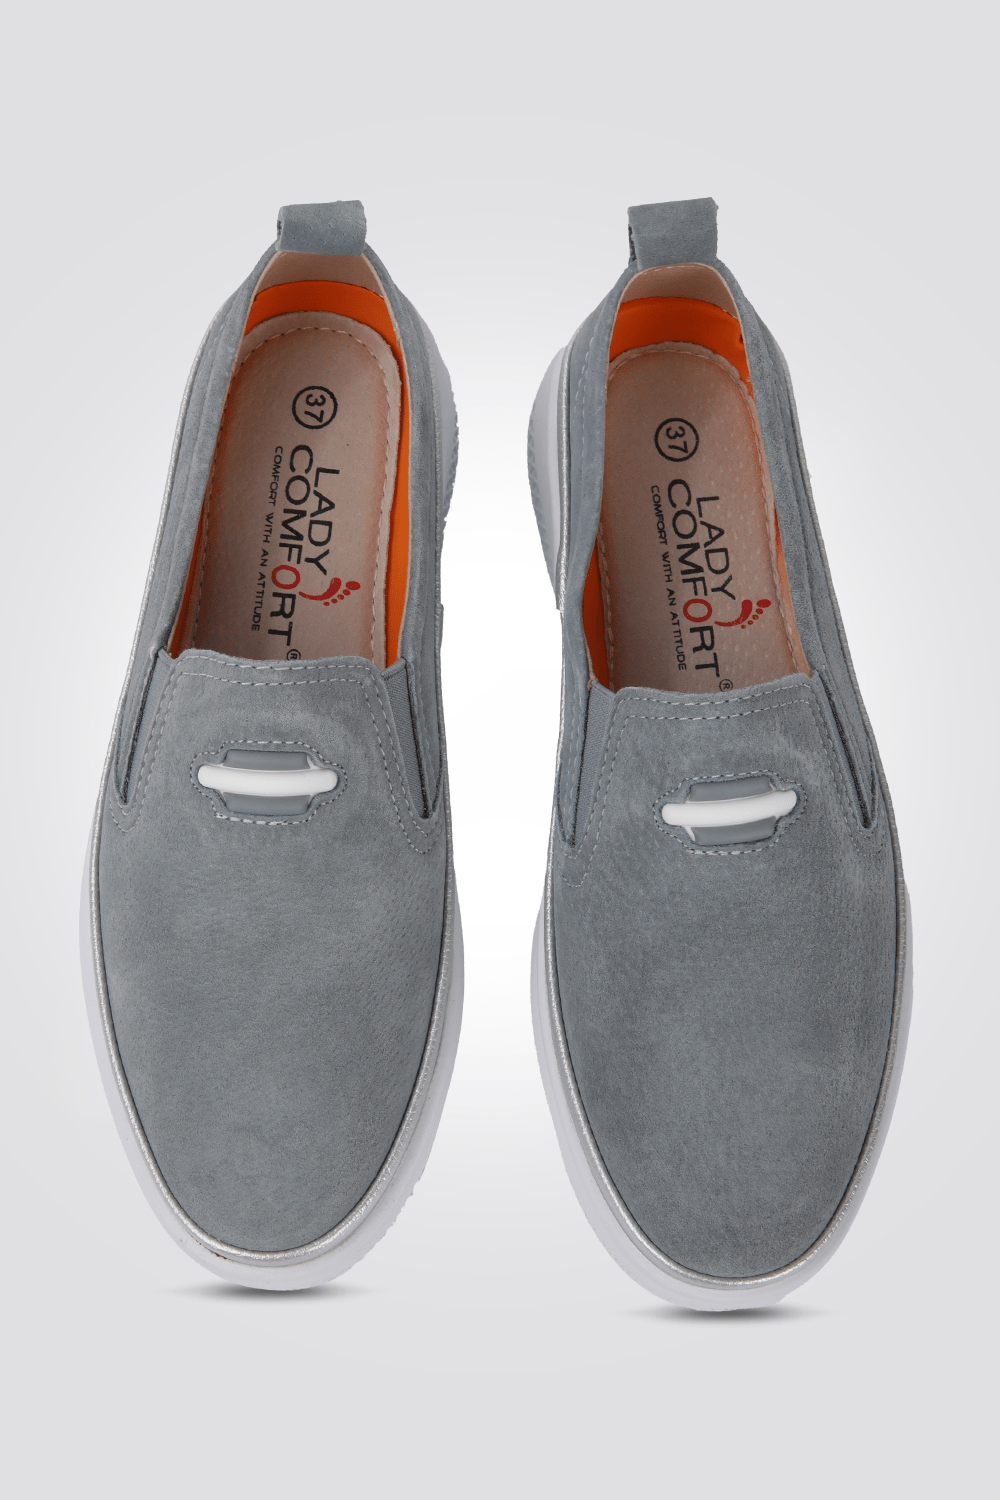 LADY COMFORT - נעל נוחות לנשים בצבע אפור - MASHBIR//365